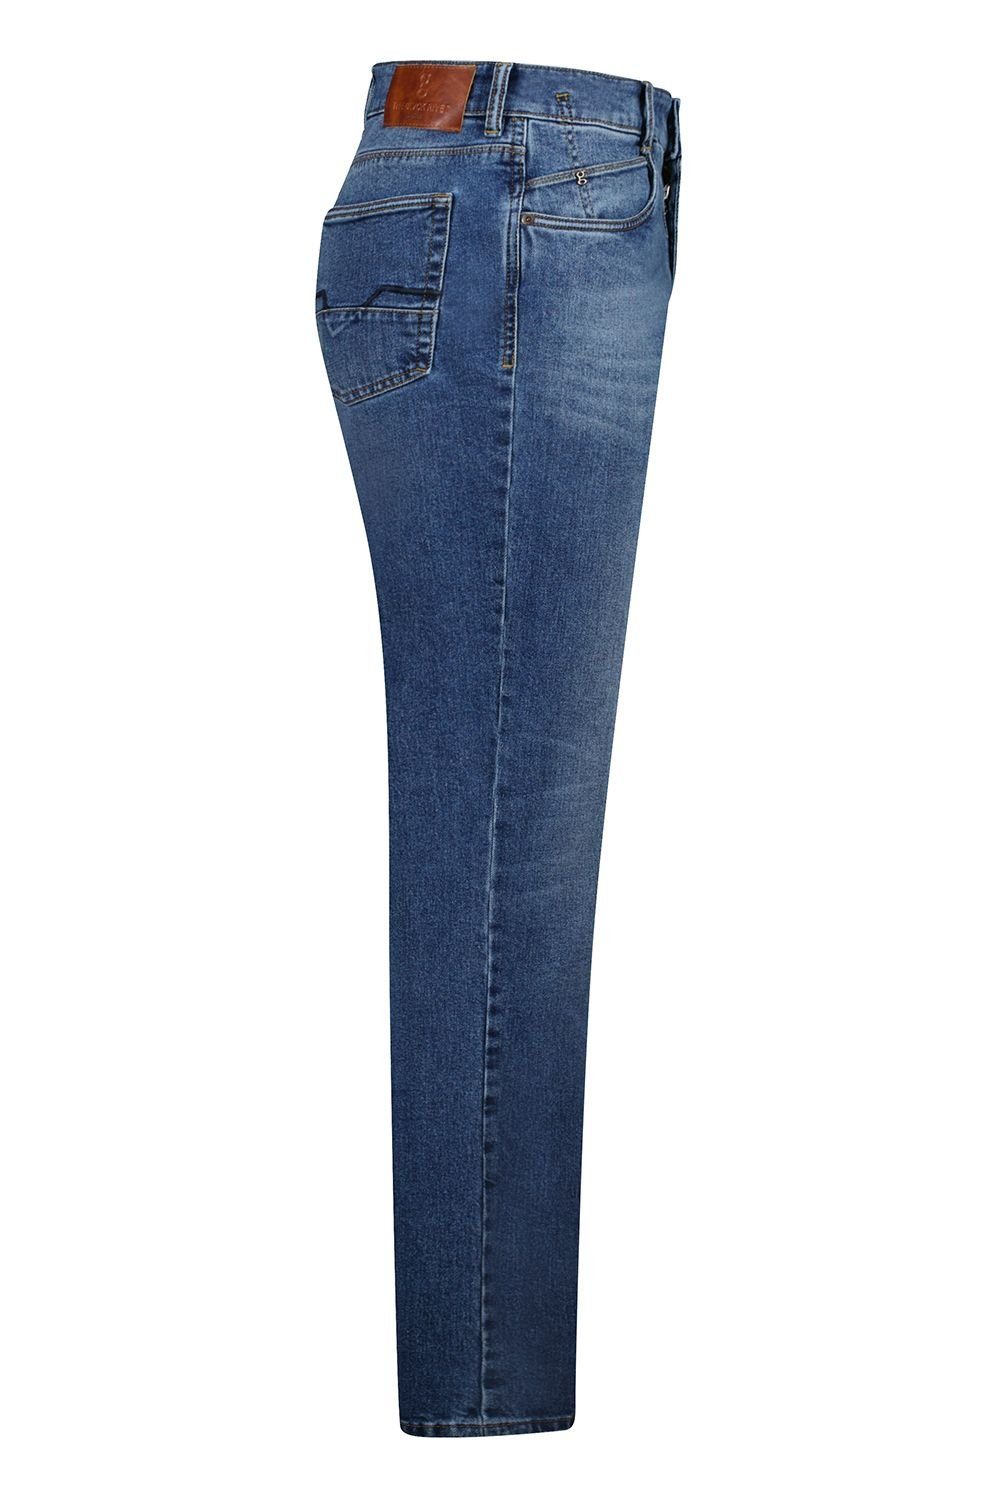 Atelier GARDEUR 5-Pocket-Jeans